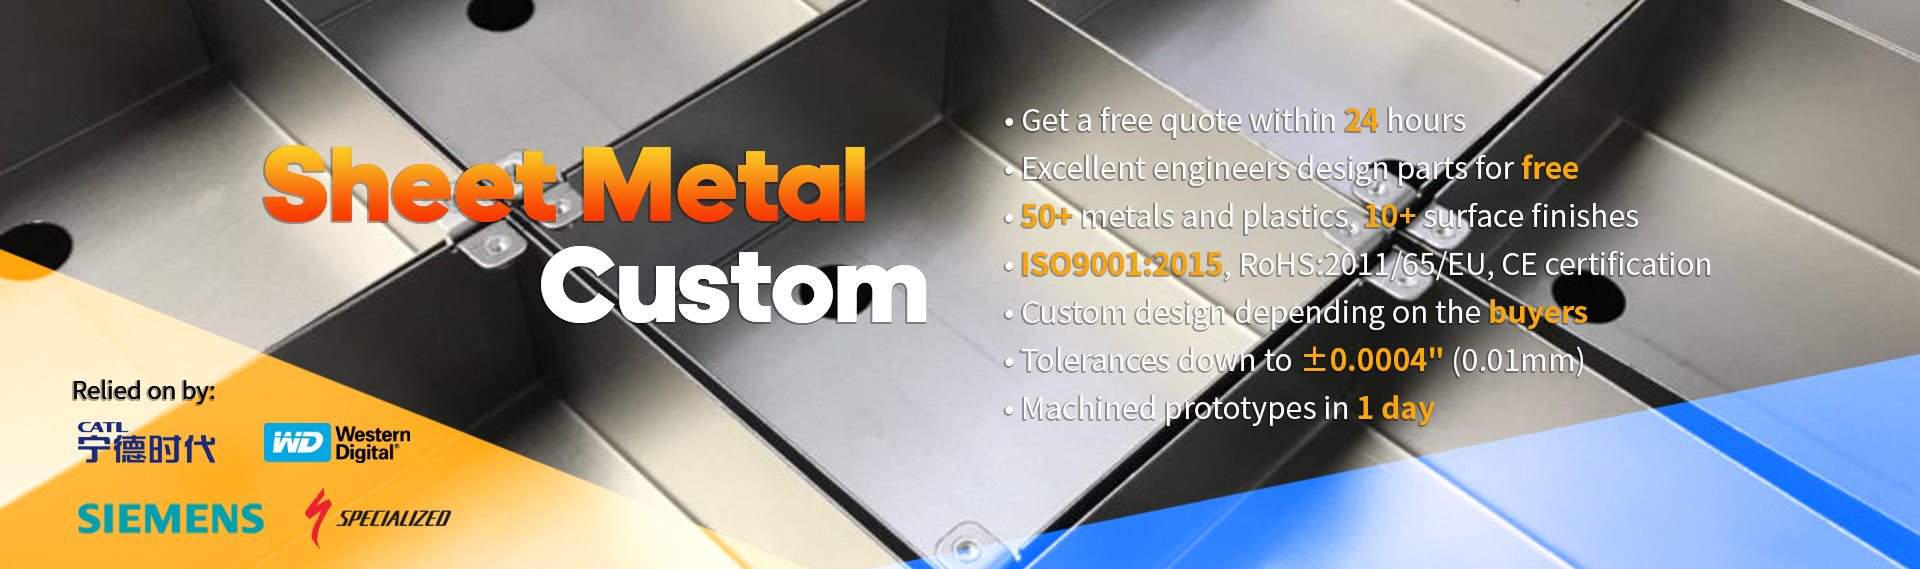 custom-sheet-metal-service